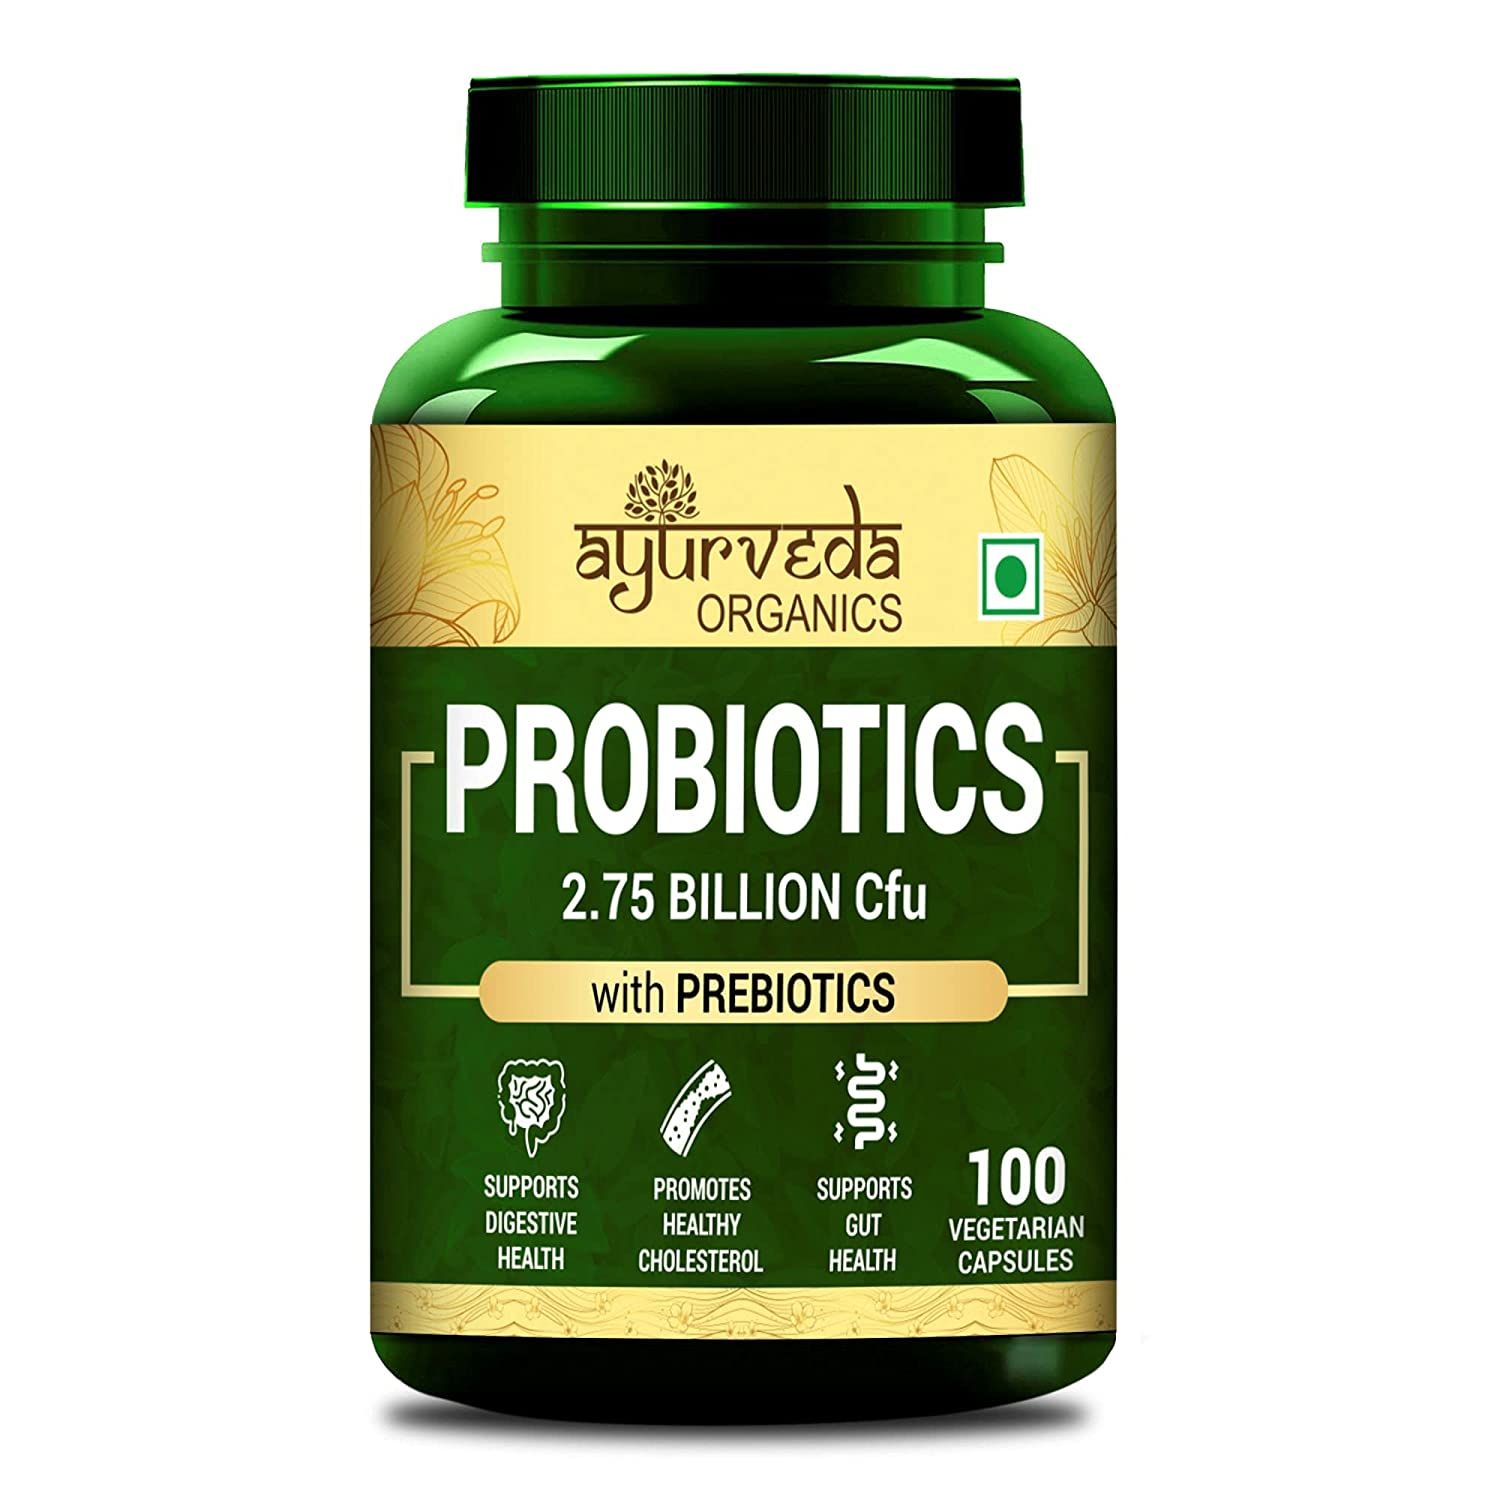 Ayurveda Organics Probiotics Supplement Image